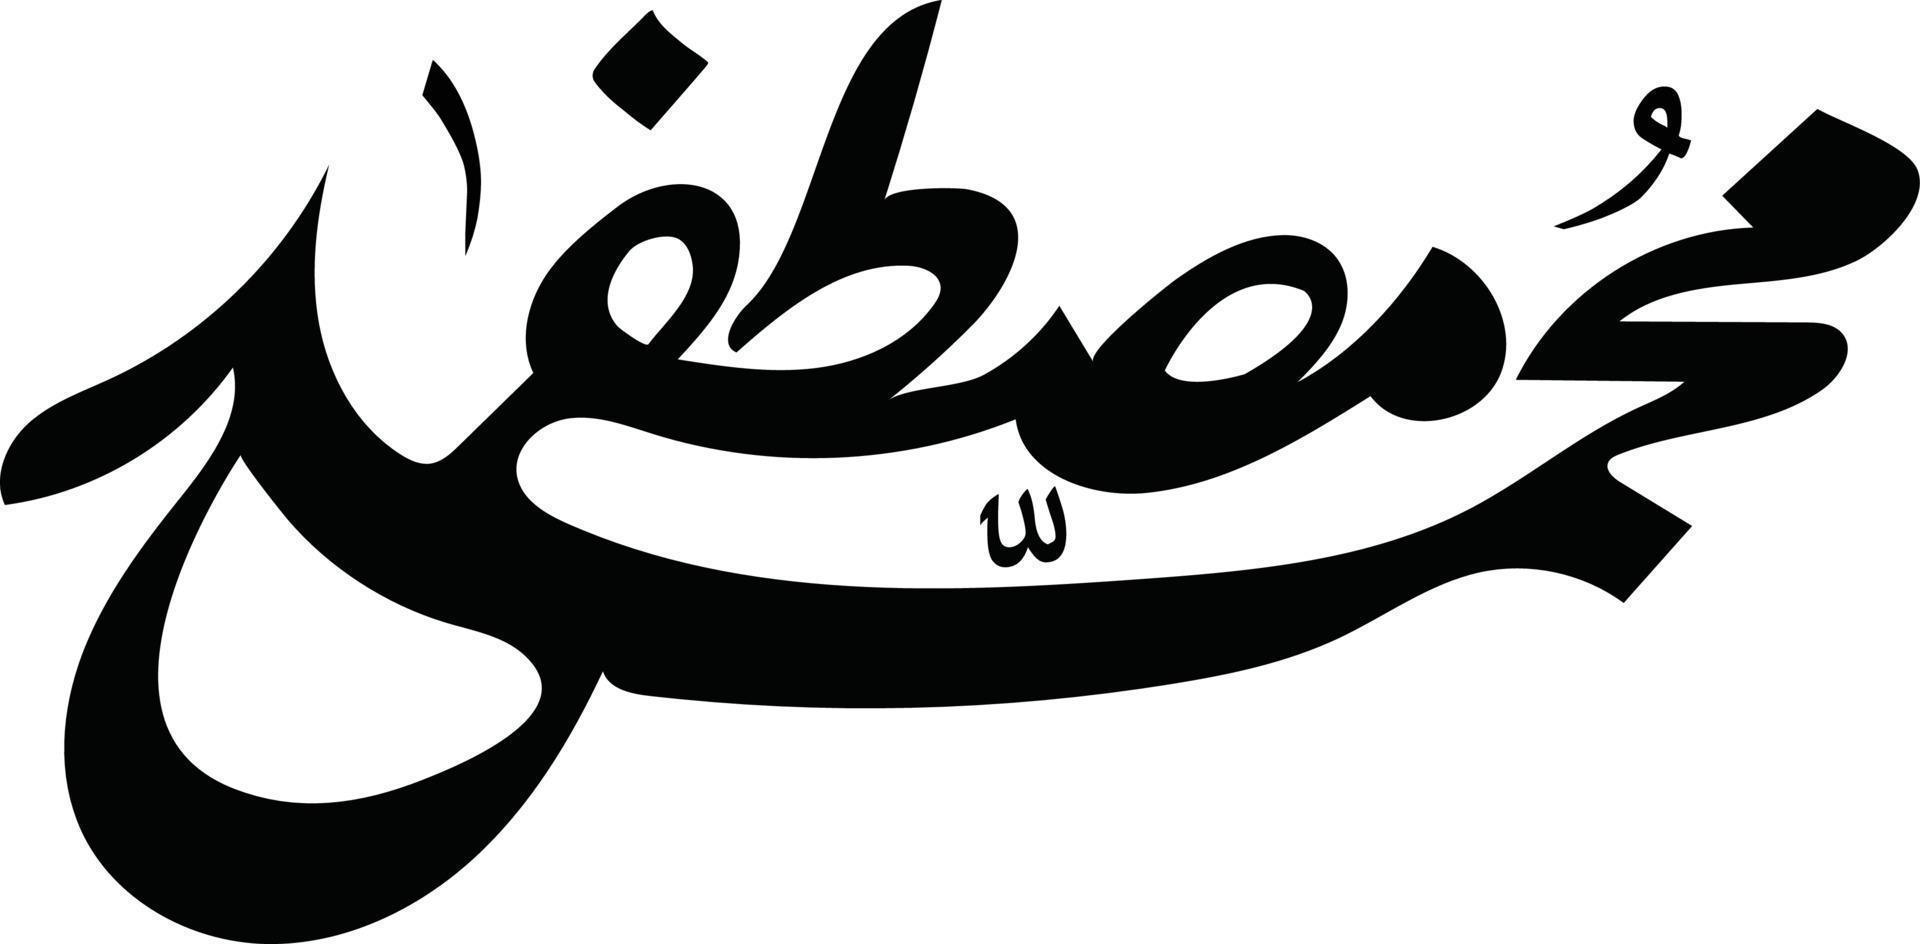 muhammad mustafa titre islamique ourdou calligraphie arabe vecteur gratuit